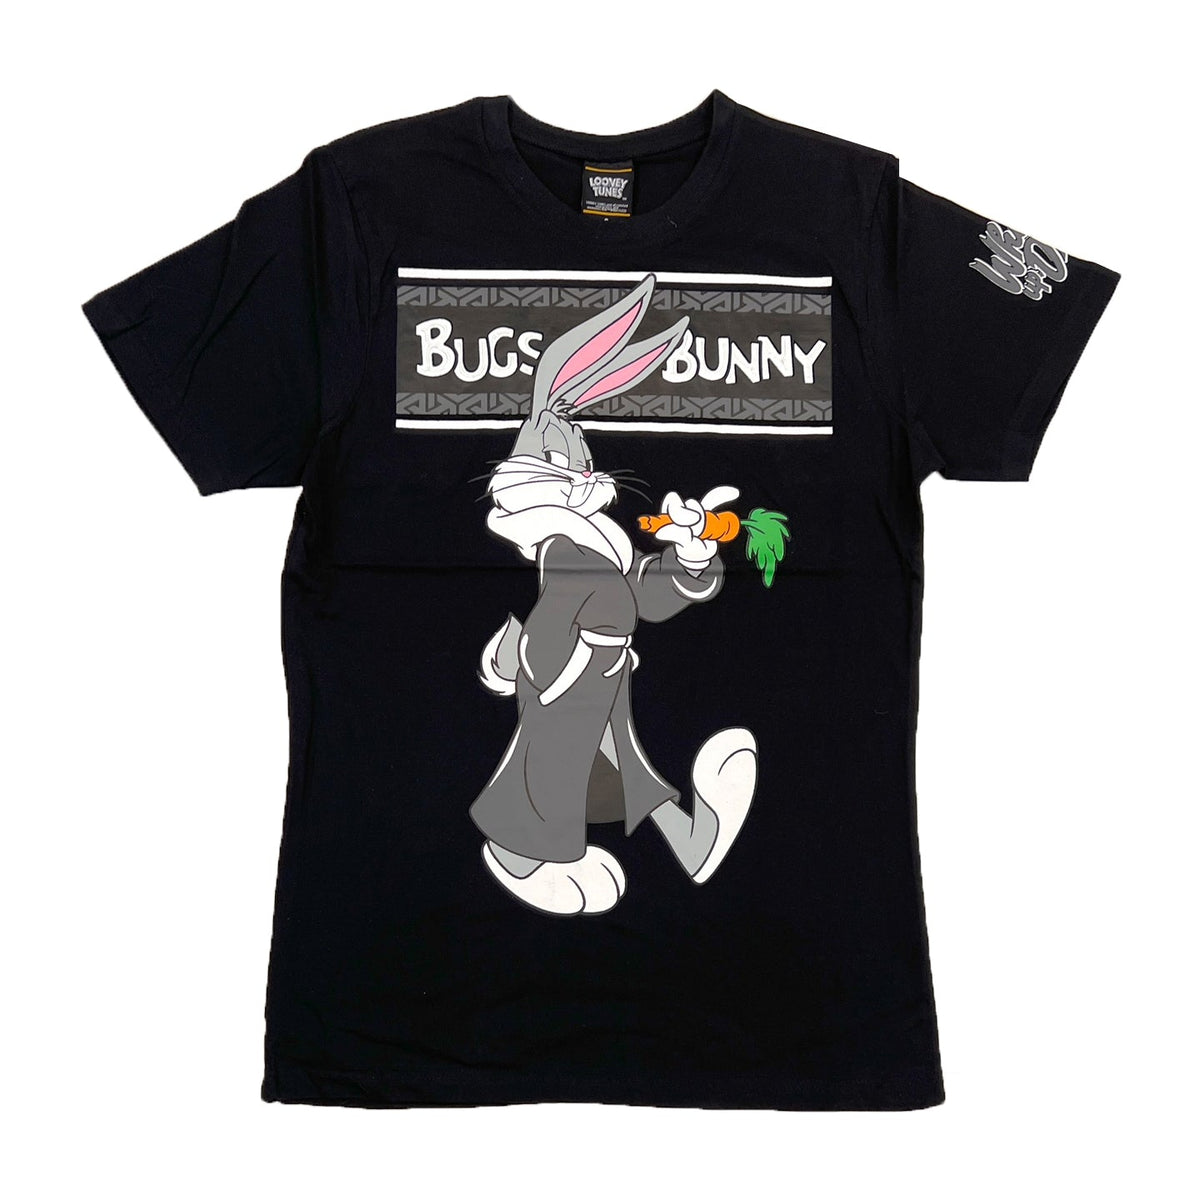 (Black) $16.99 Tunes Looney Tee Bugs Bunny for $30 / 2